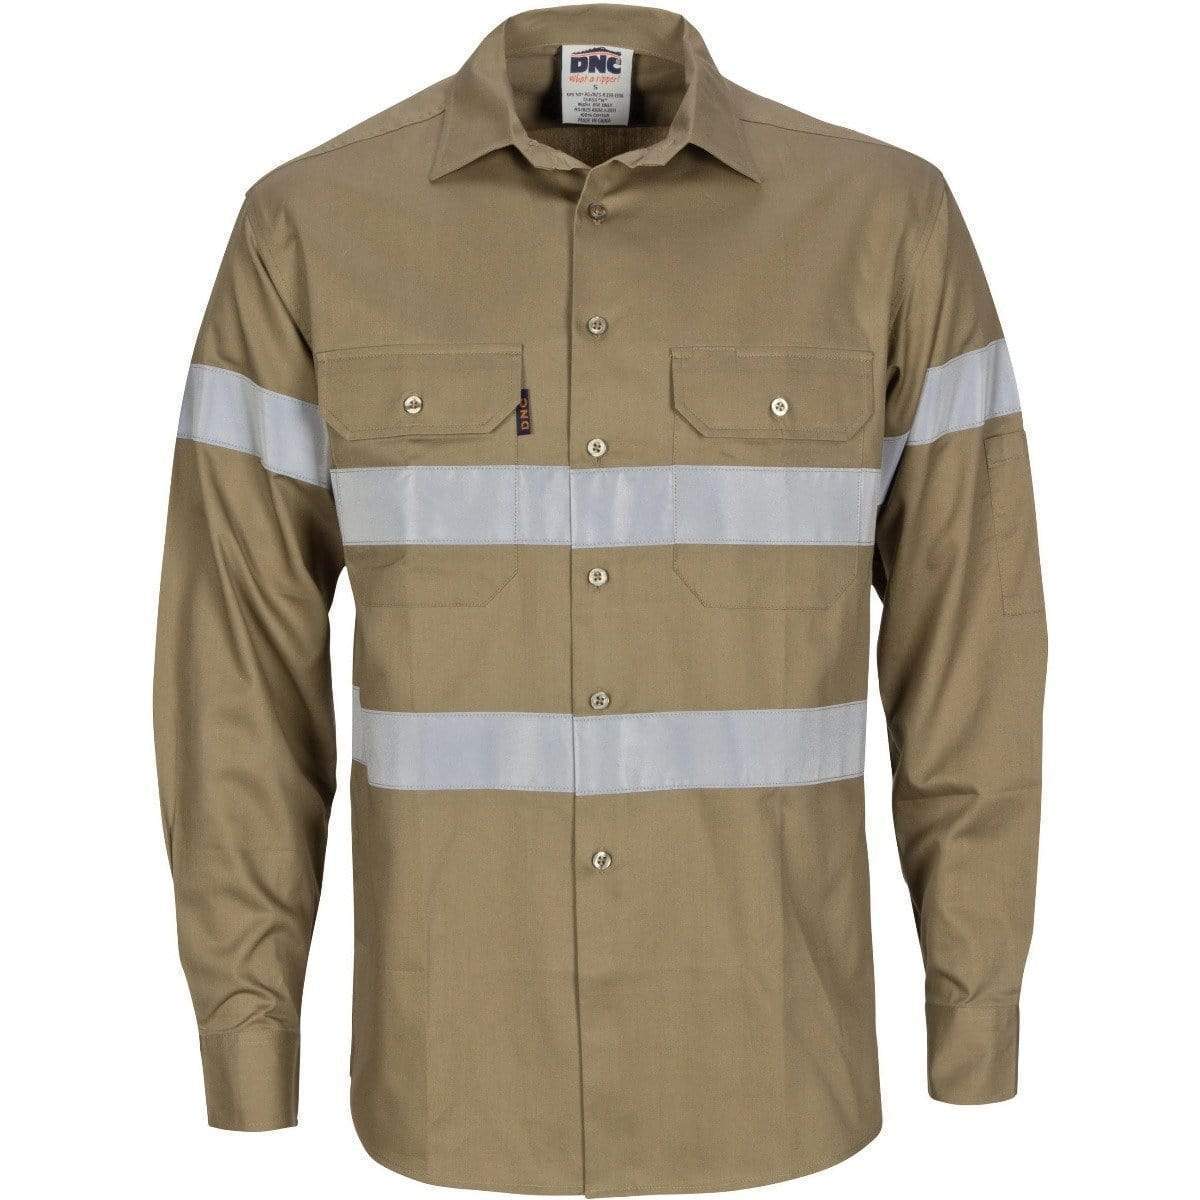 Dnc Workwear Hi-vis Cool-breeze Long Sleeve Cotton Shirt With Generic Reflective Tape - 3967 Work Wear DNC Workwear Khaki XS 